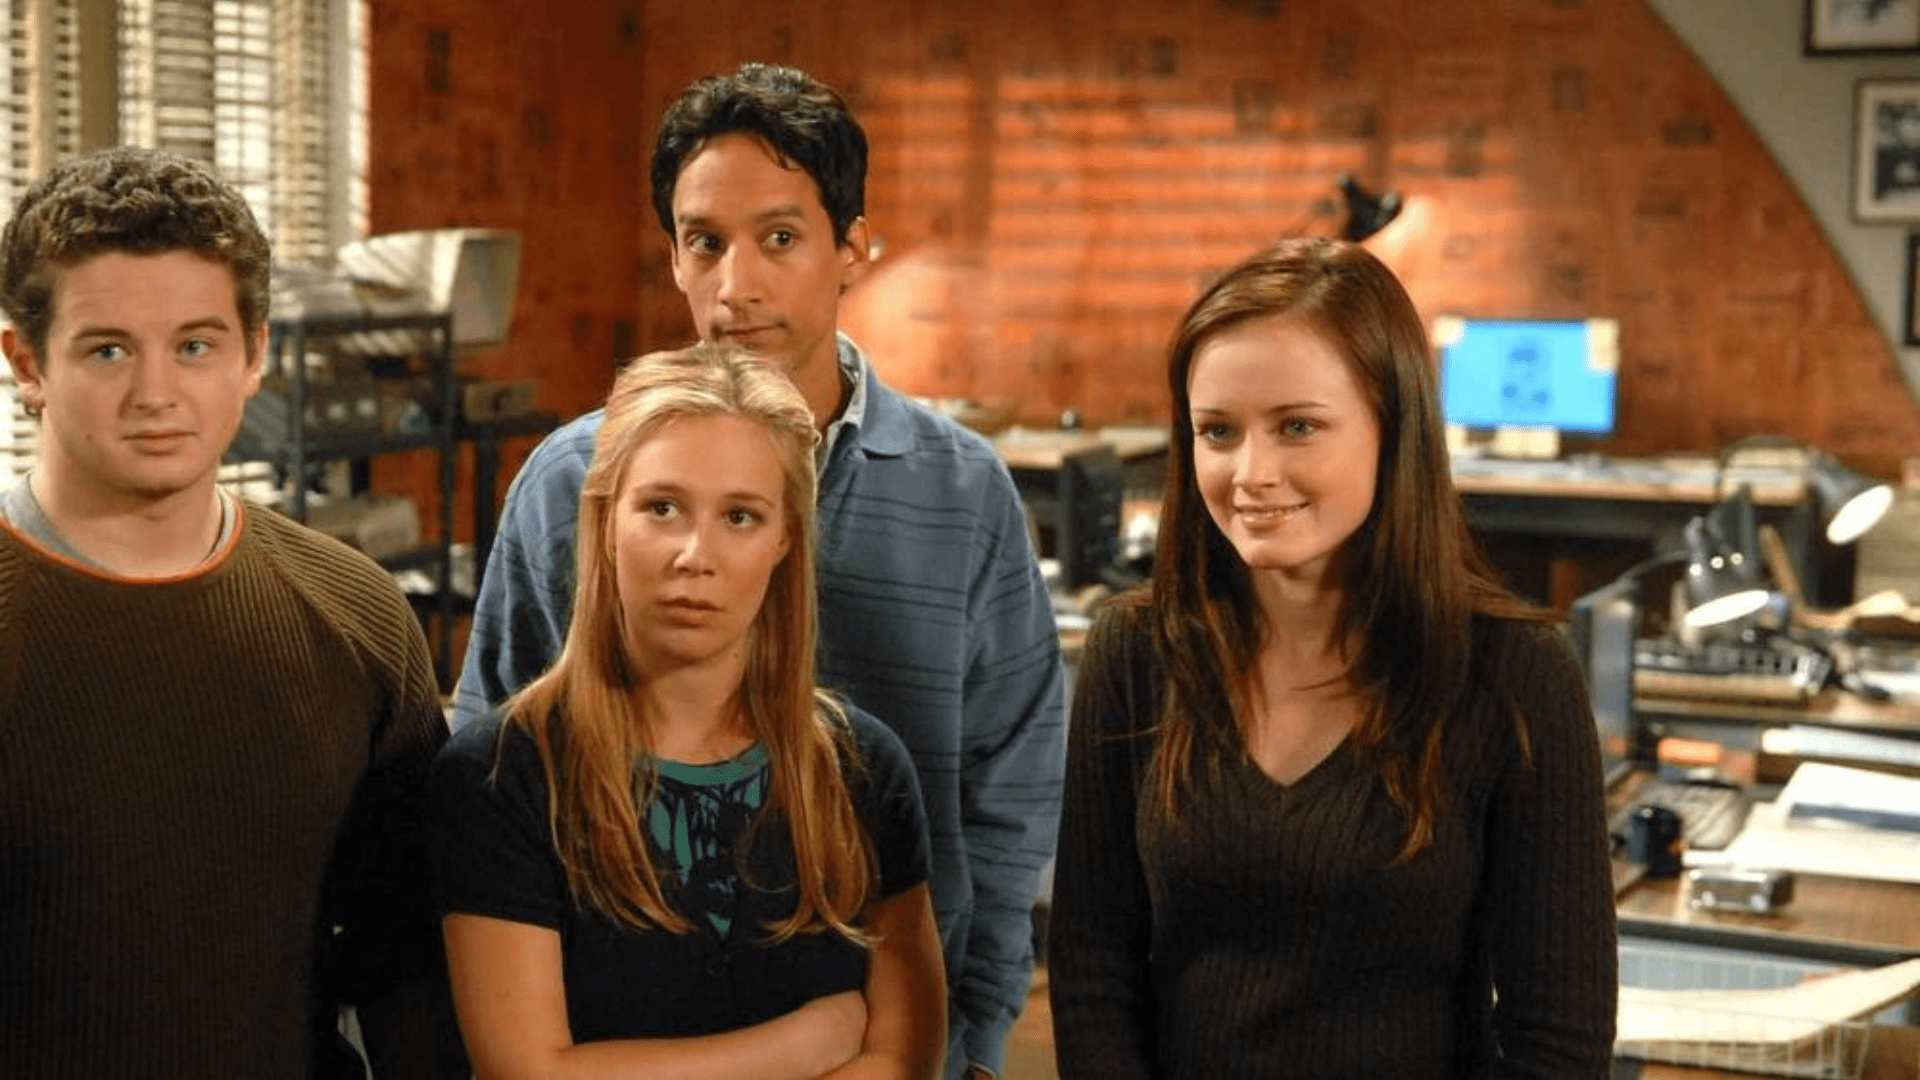 Books In Gilmore Girls Season 7 - Books Mentioned In Season 7 Of Gilmore Girls | Rory Gilmore Reading Challenge